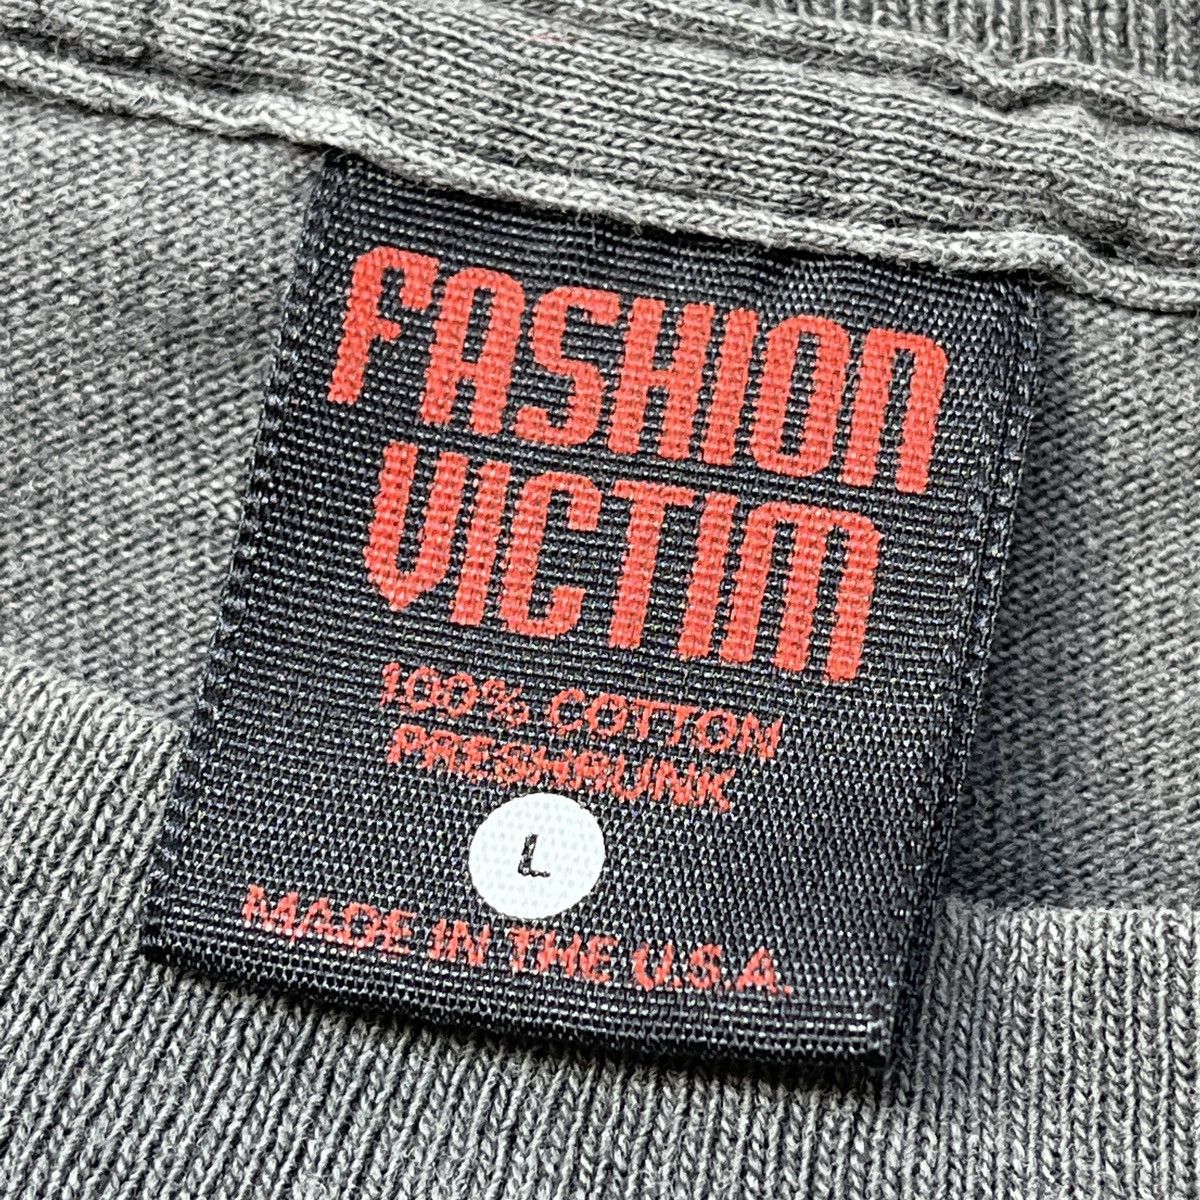 Fashion Victim Texas Vintage Single Stitches USA - 6